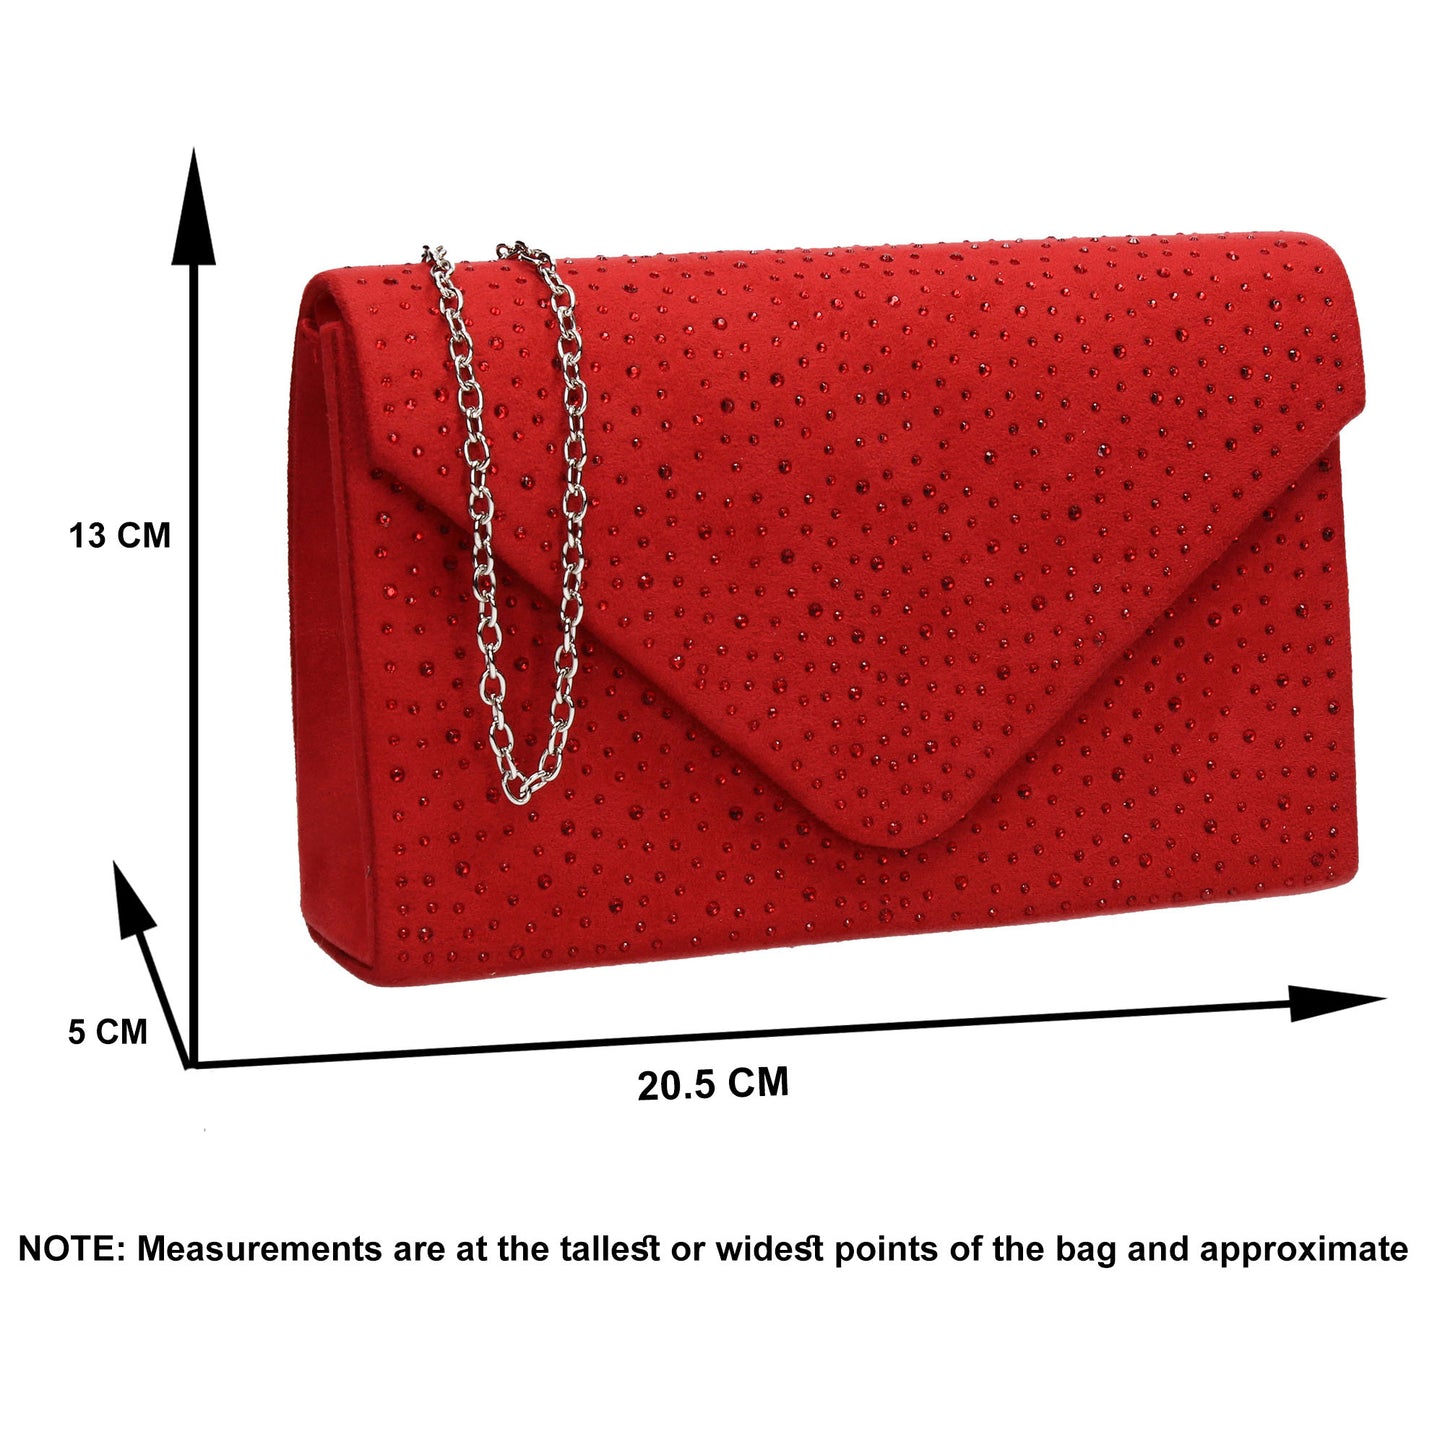 SWANKYSWANS Sidney Diamante Clutch Bag Red Cute Cheap Clutch Bag For Weddings School and Work